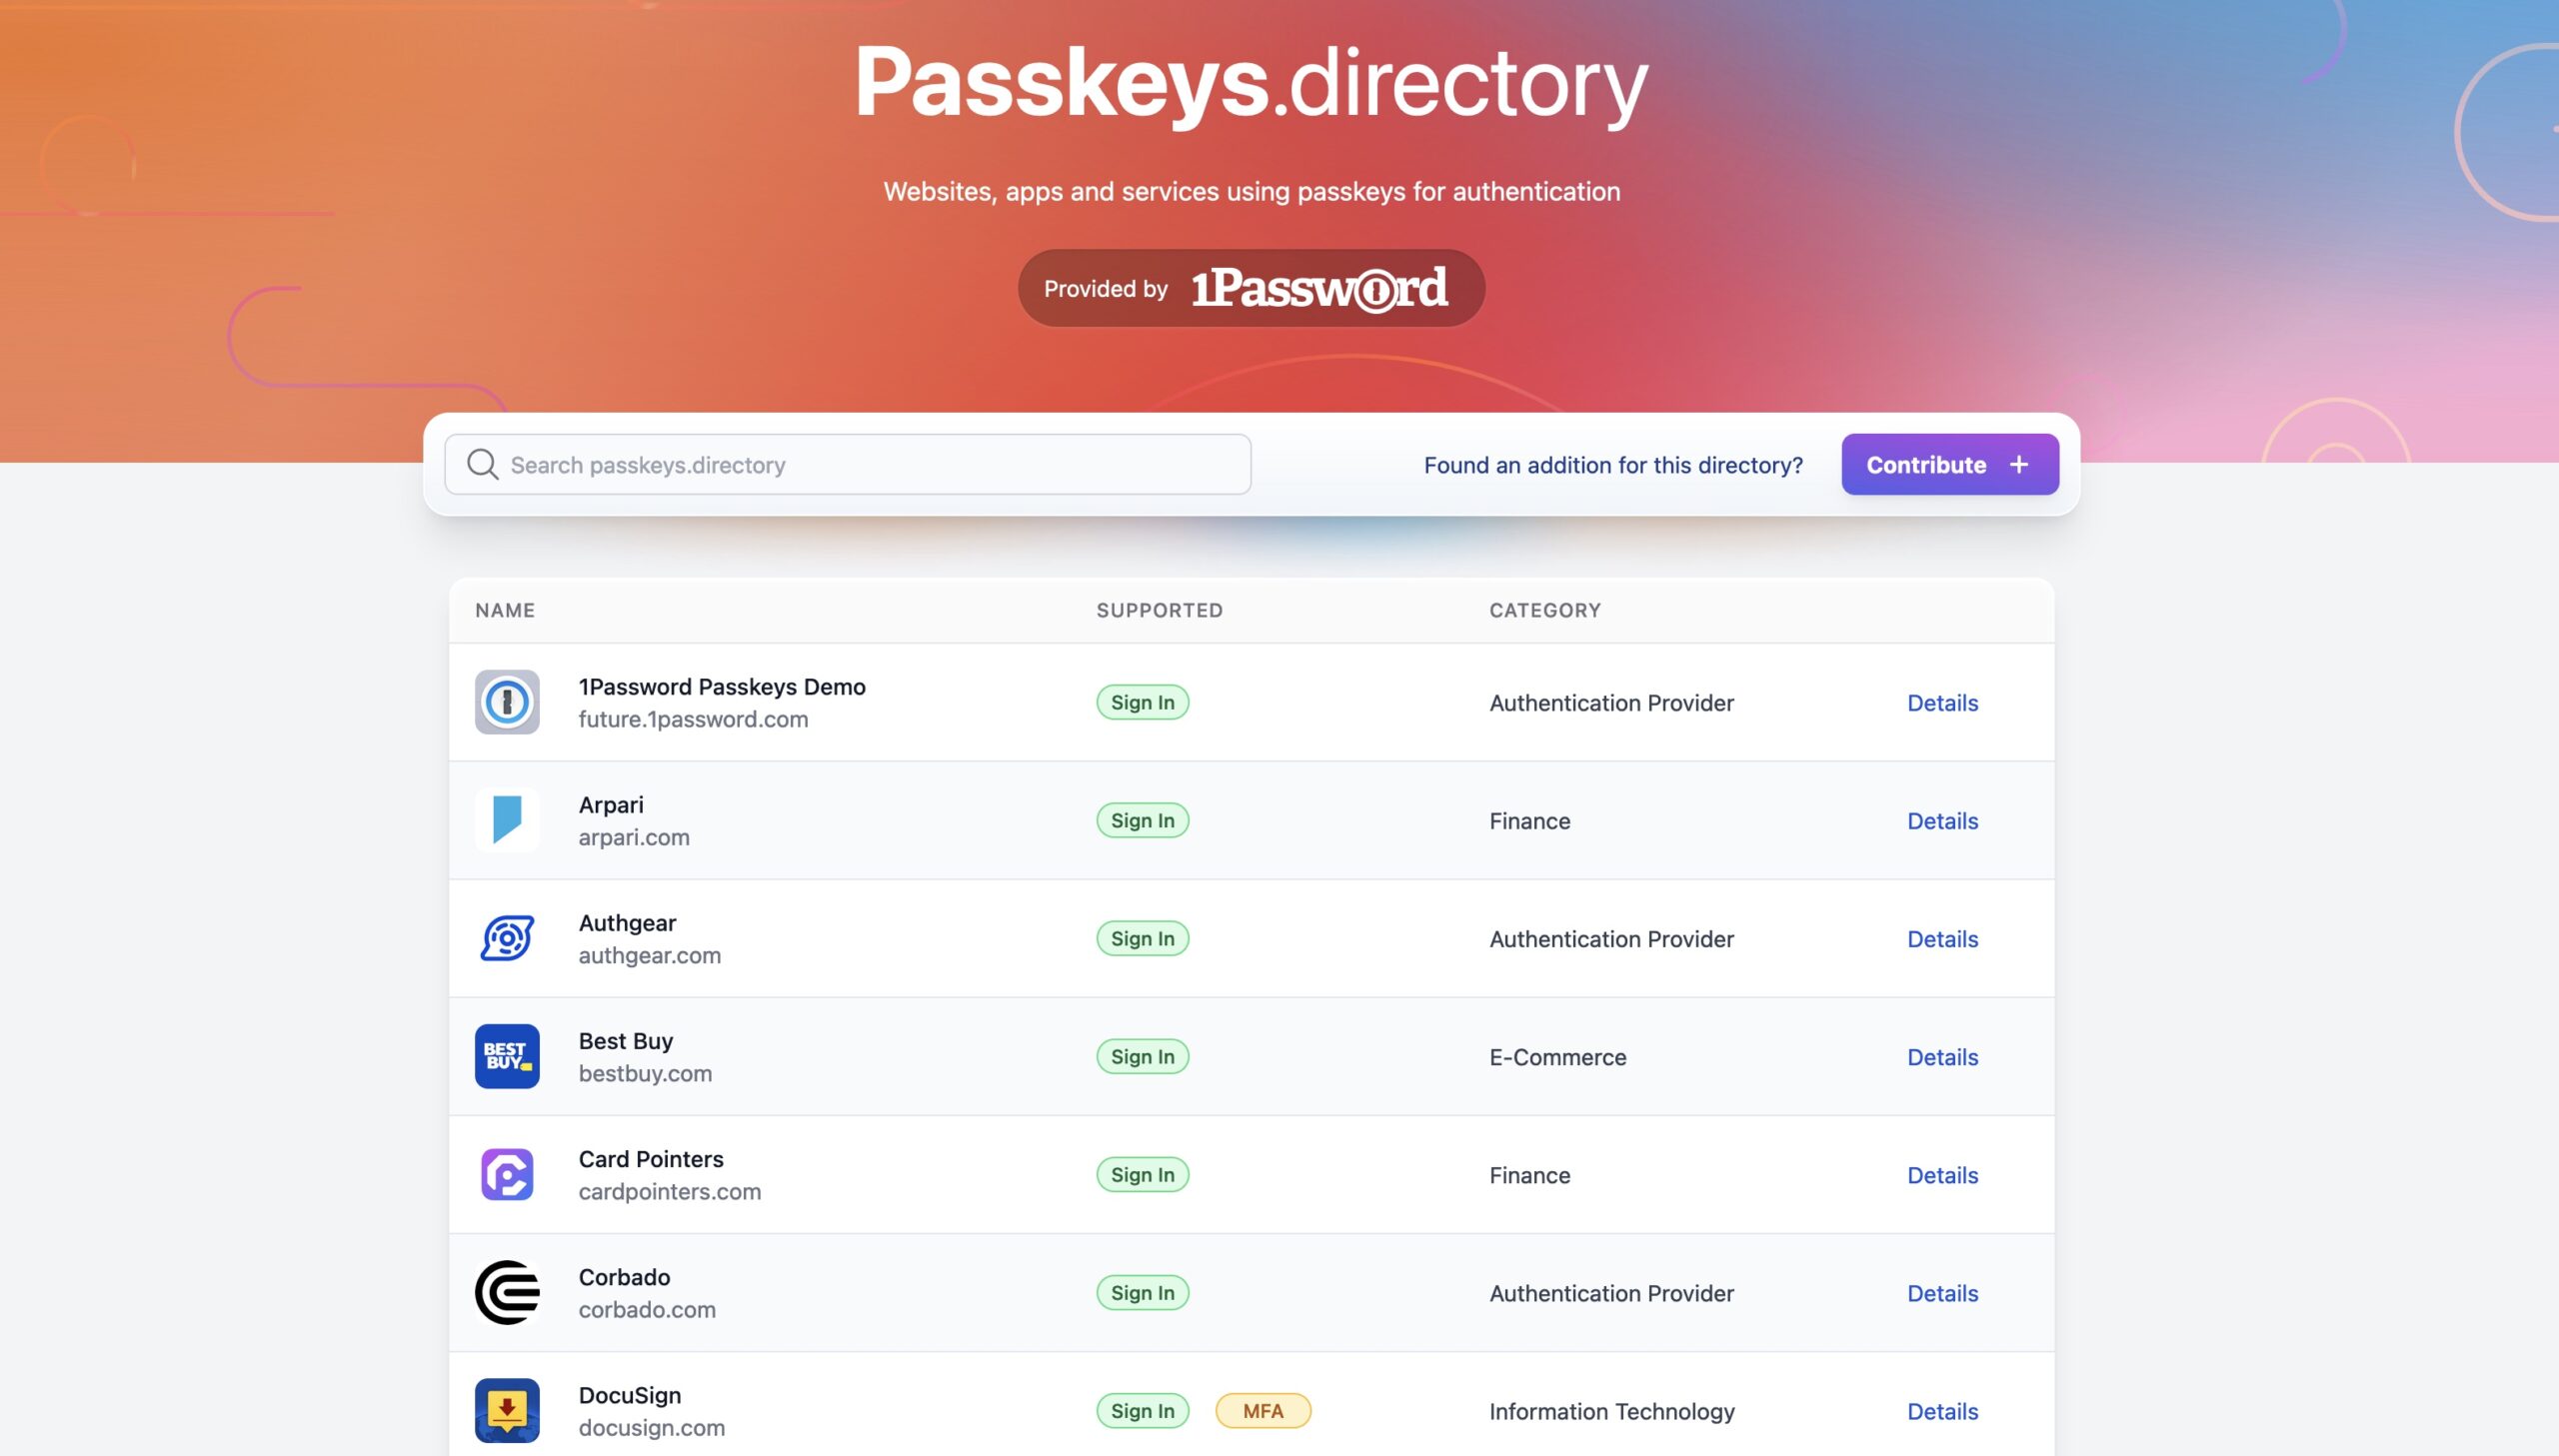 Passkeys.directory